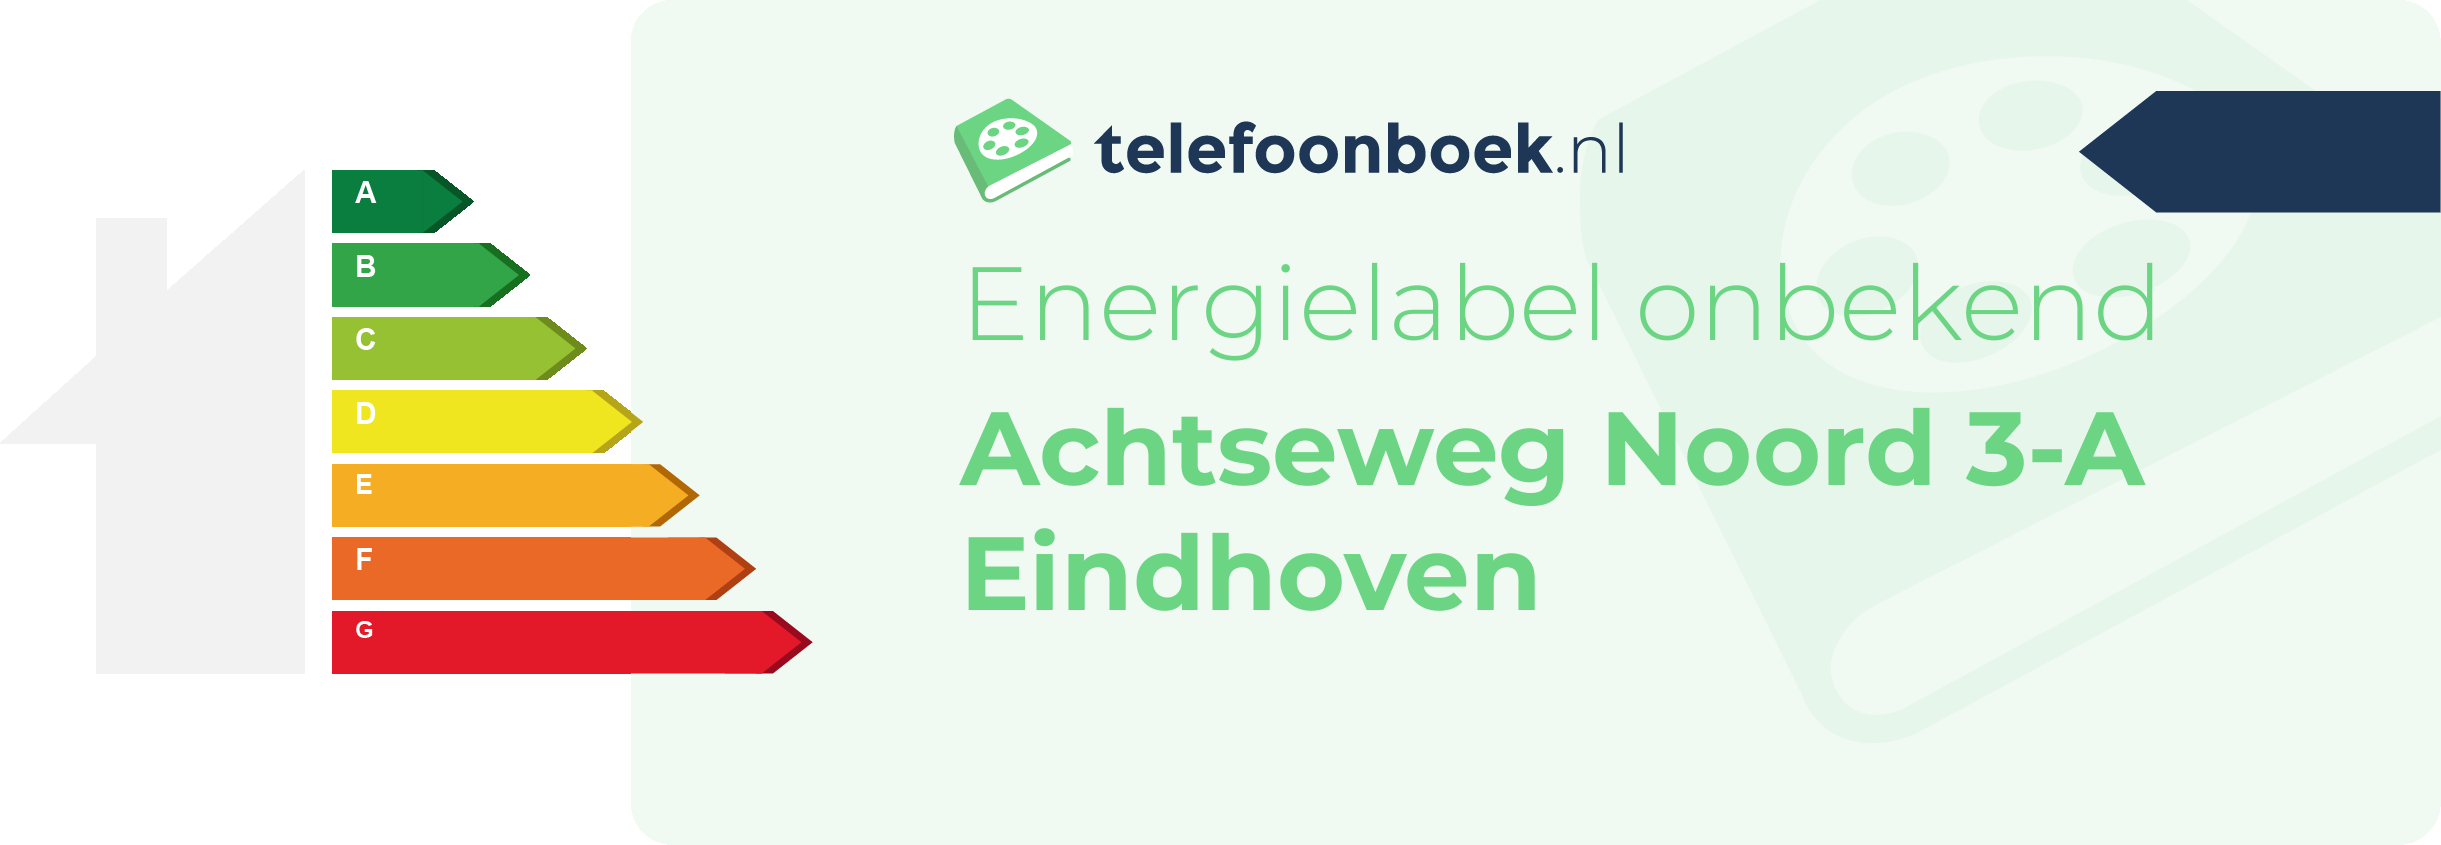 Energielabel Achtseweg Noord 3-A Eindhoven